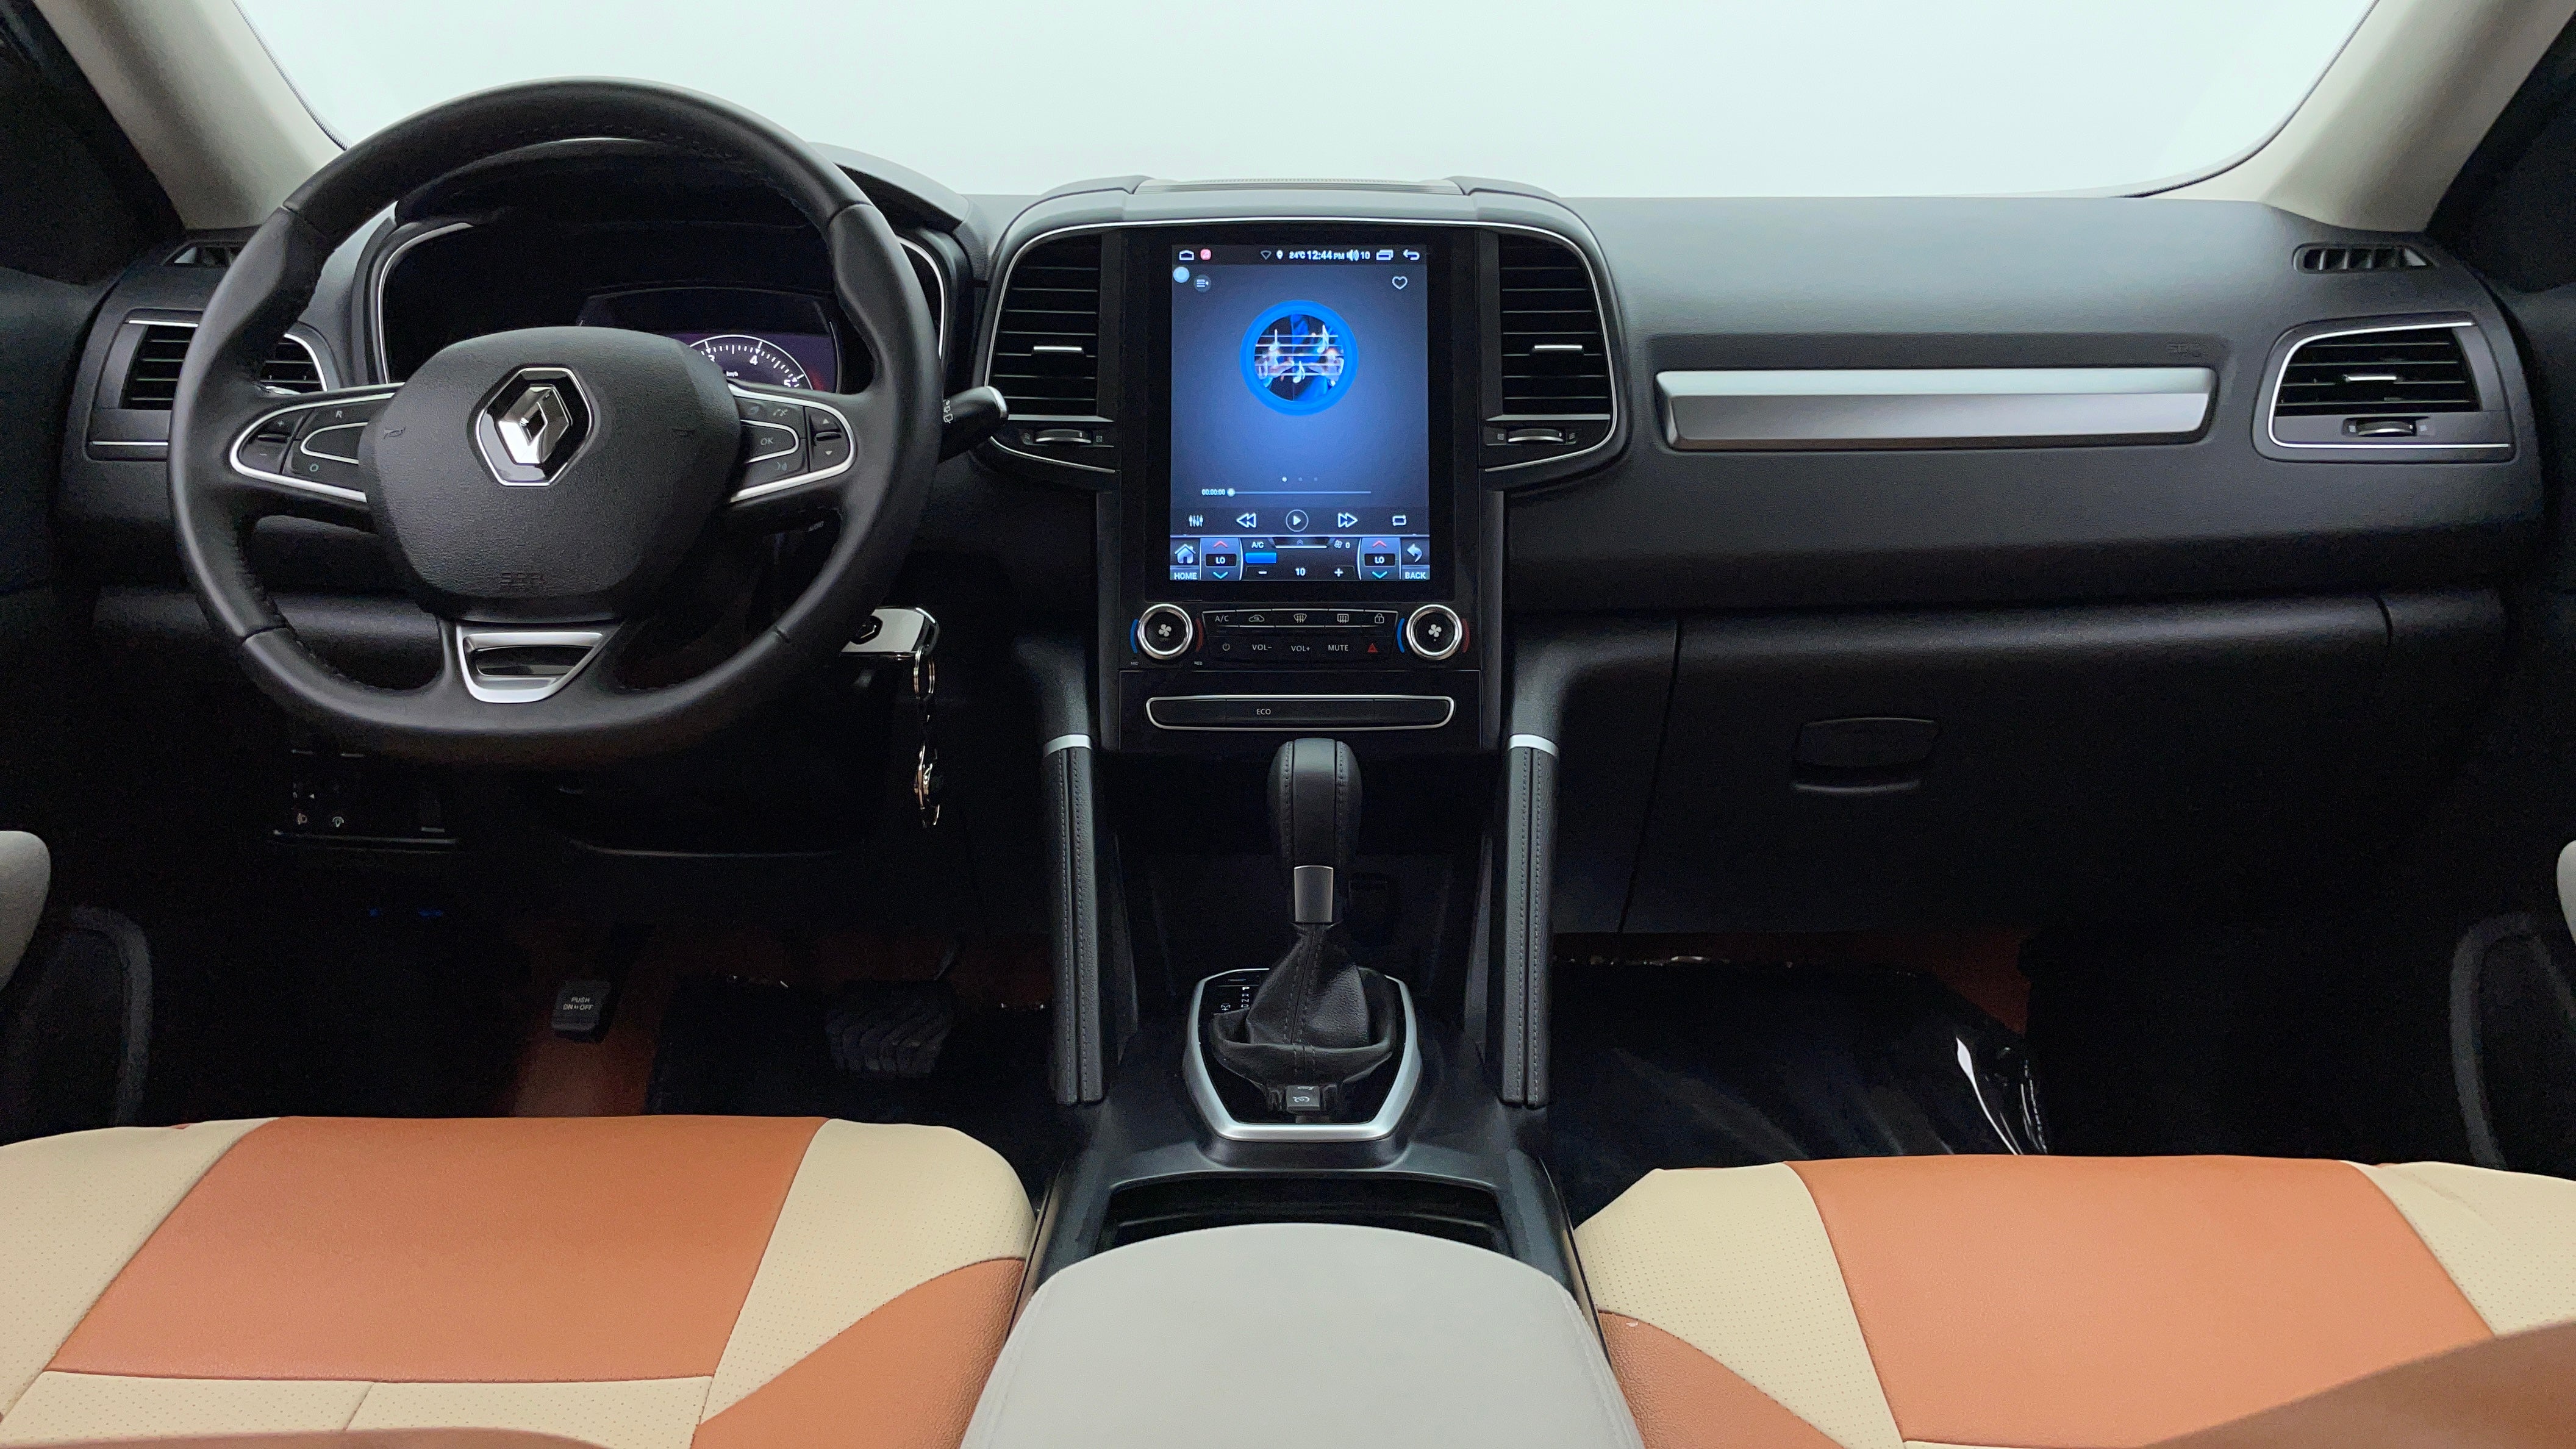 Renault Koleos-Dashboard View